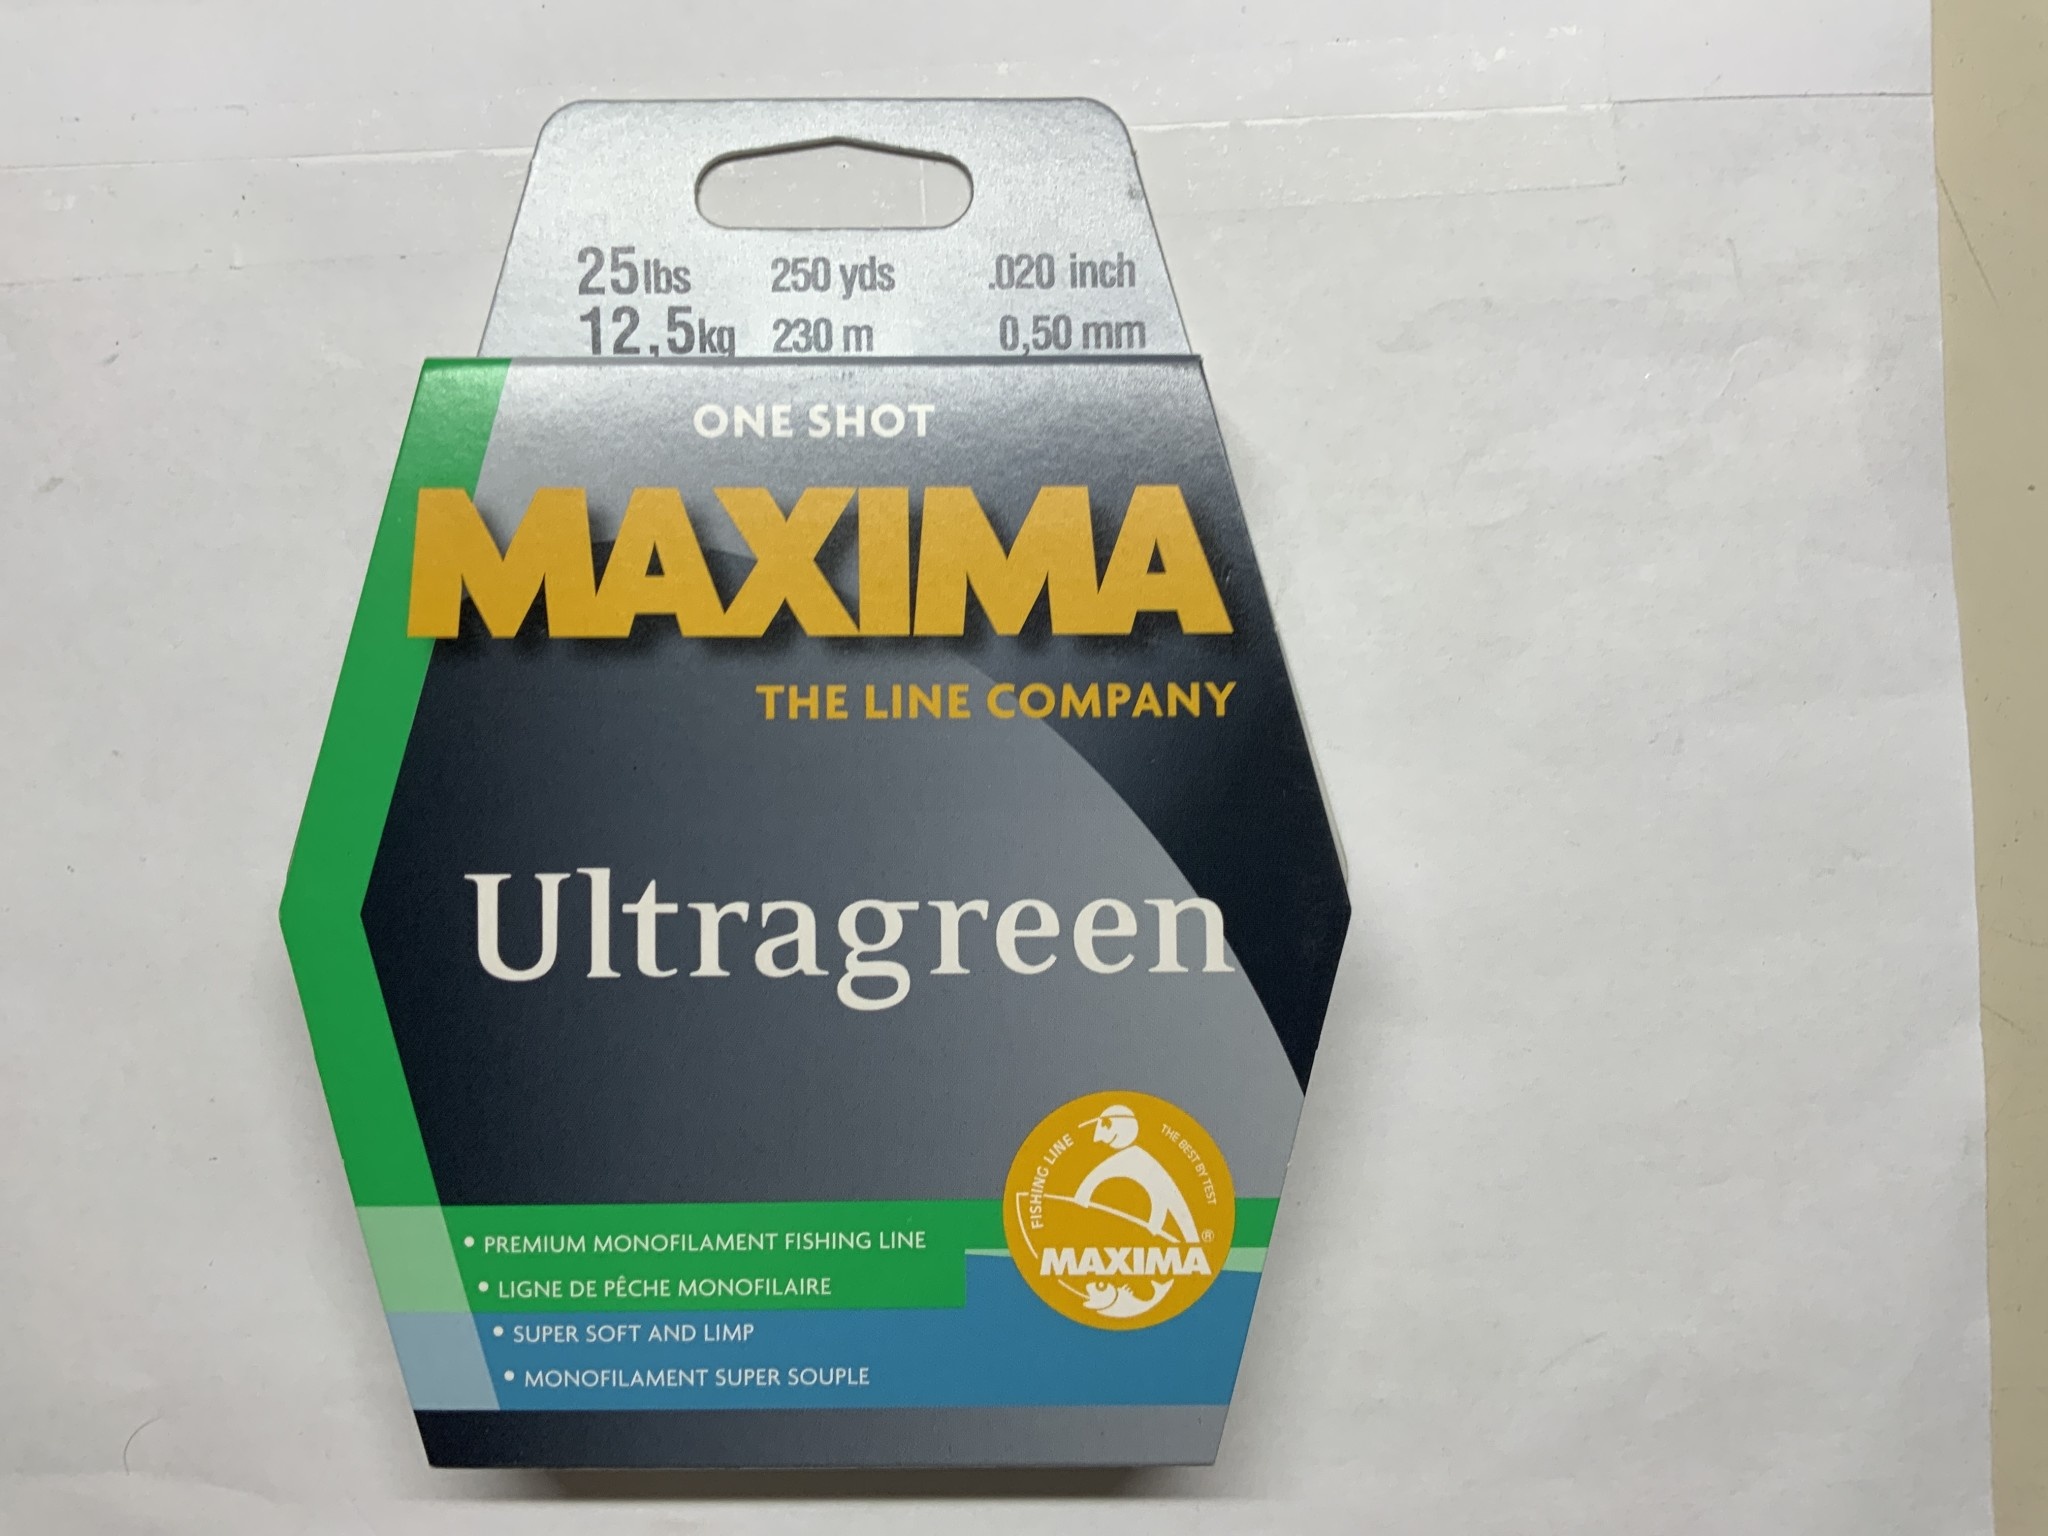 Maxima Ultragreen One Shot - 10 Lbs.